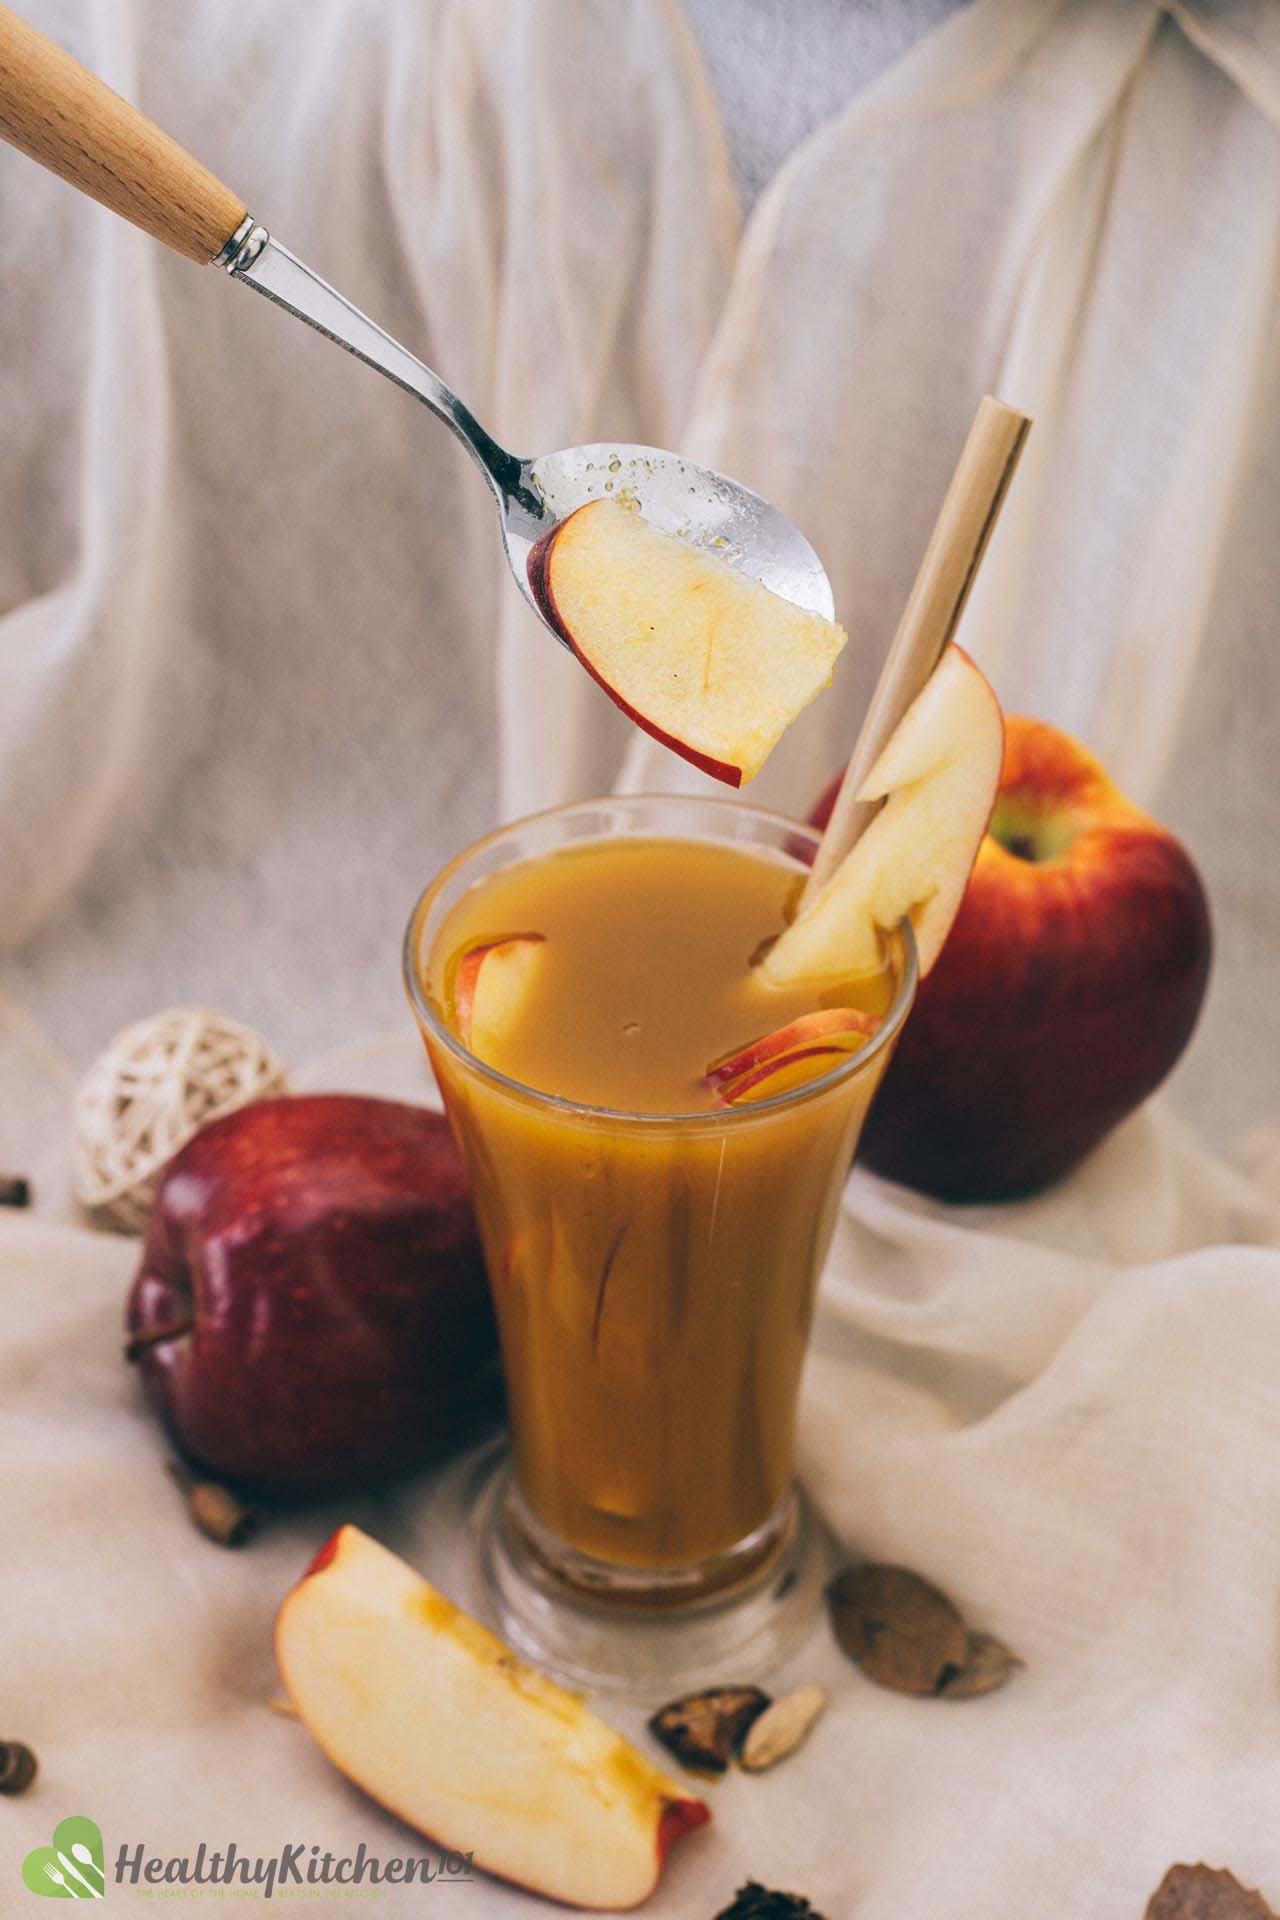 Healthy Harry Potter Pumpkin Juice Recipe - Magical Drink For Halloween